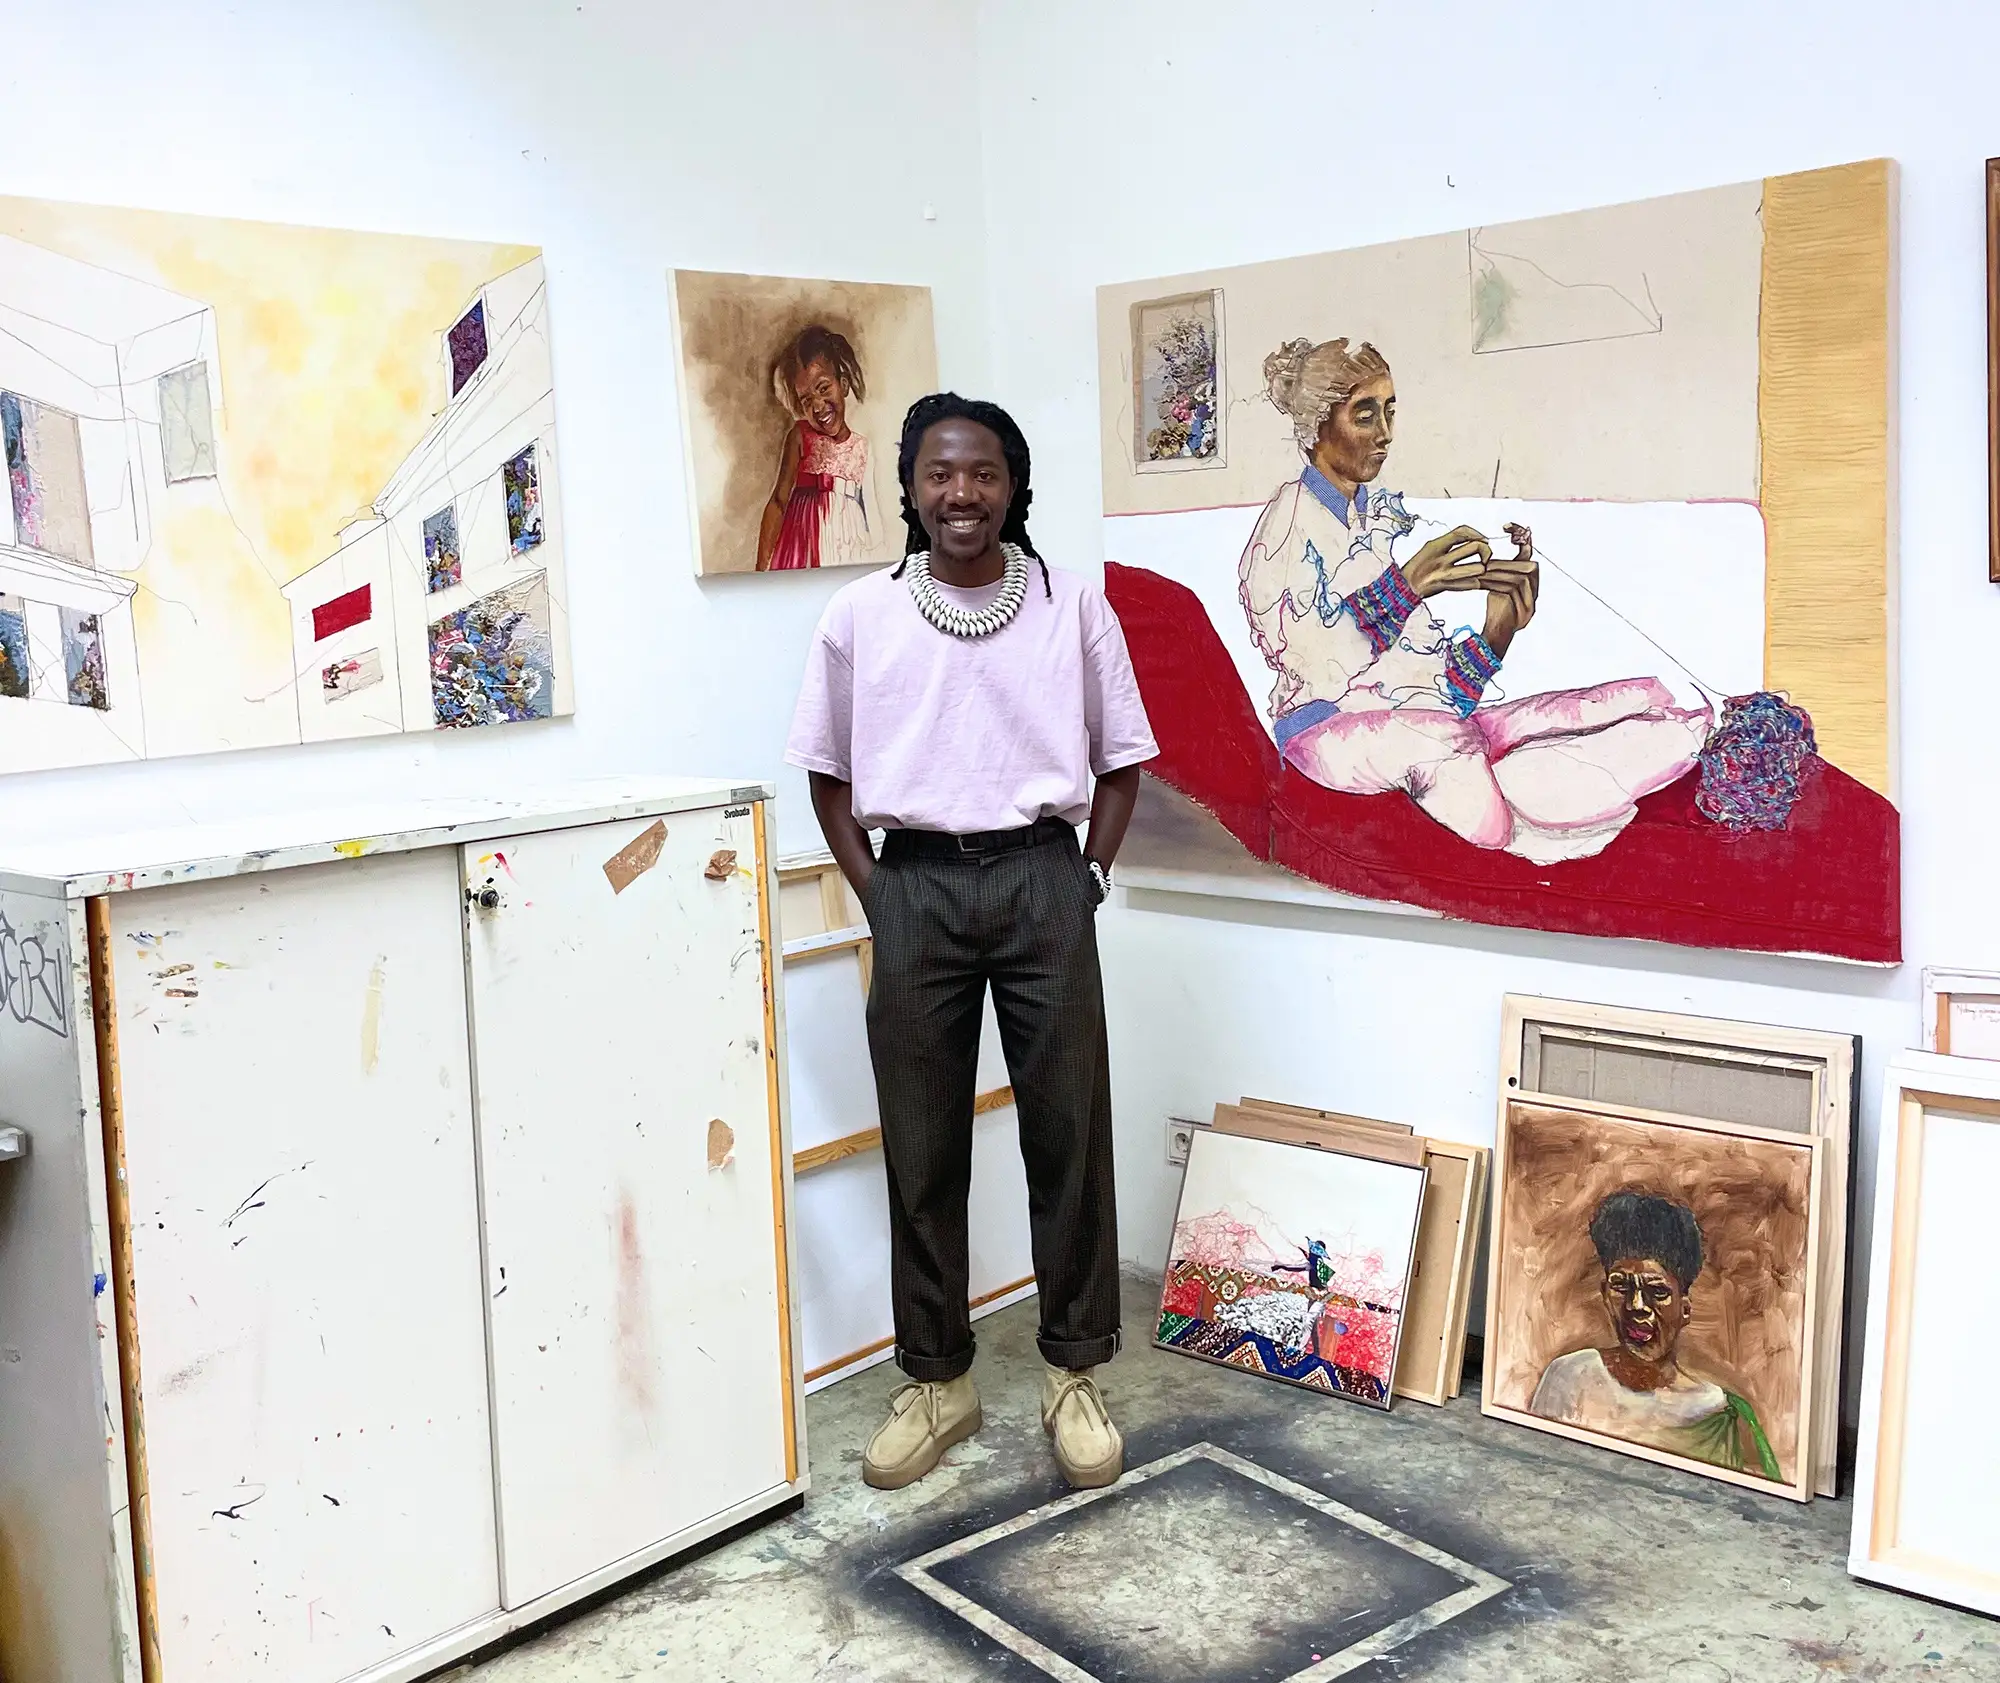 ndagijimana alphonse, promsing artist art university linz, ursula hübner, rwanda new contemporary artist